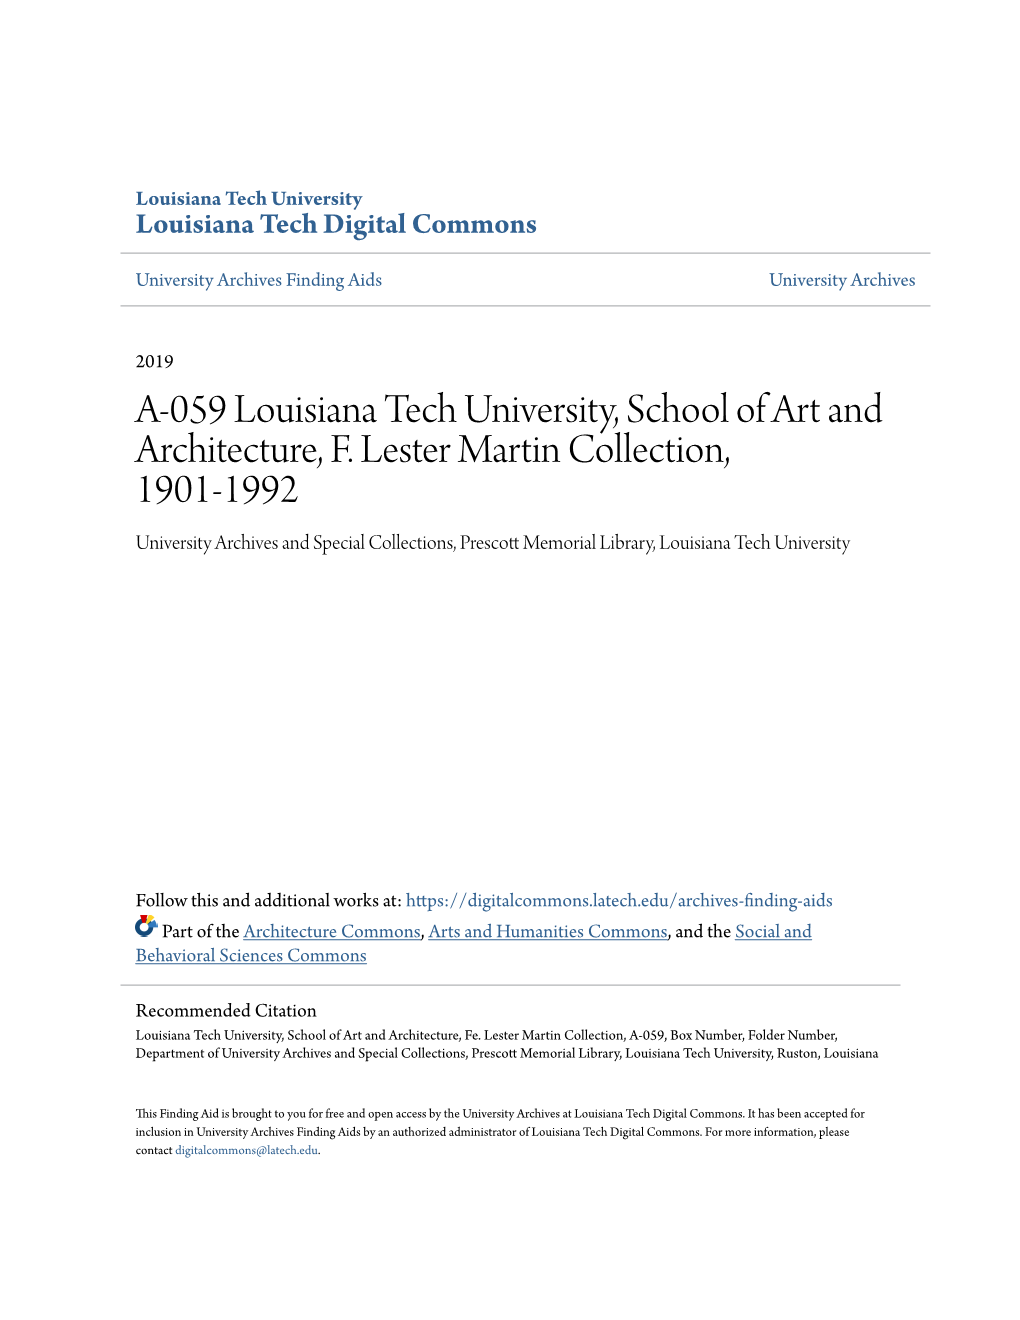 A-059 Louisiana Tech University, School of Art and Architecture, F